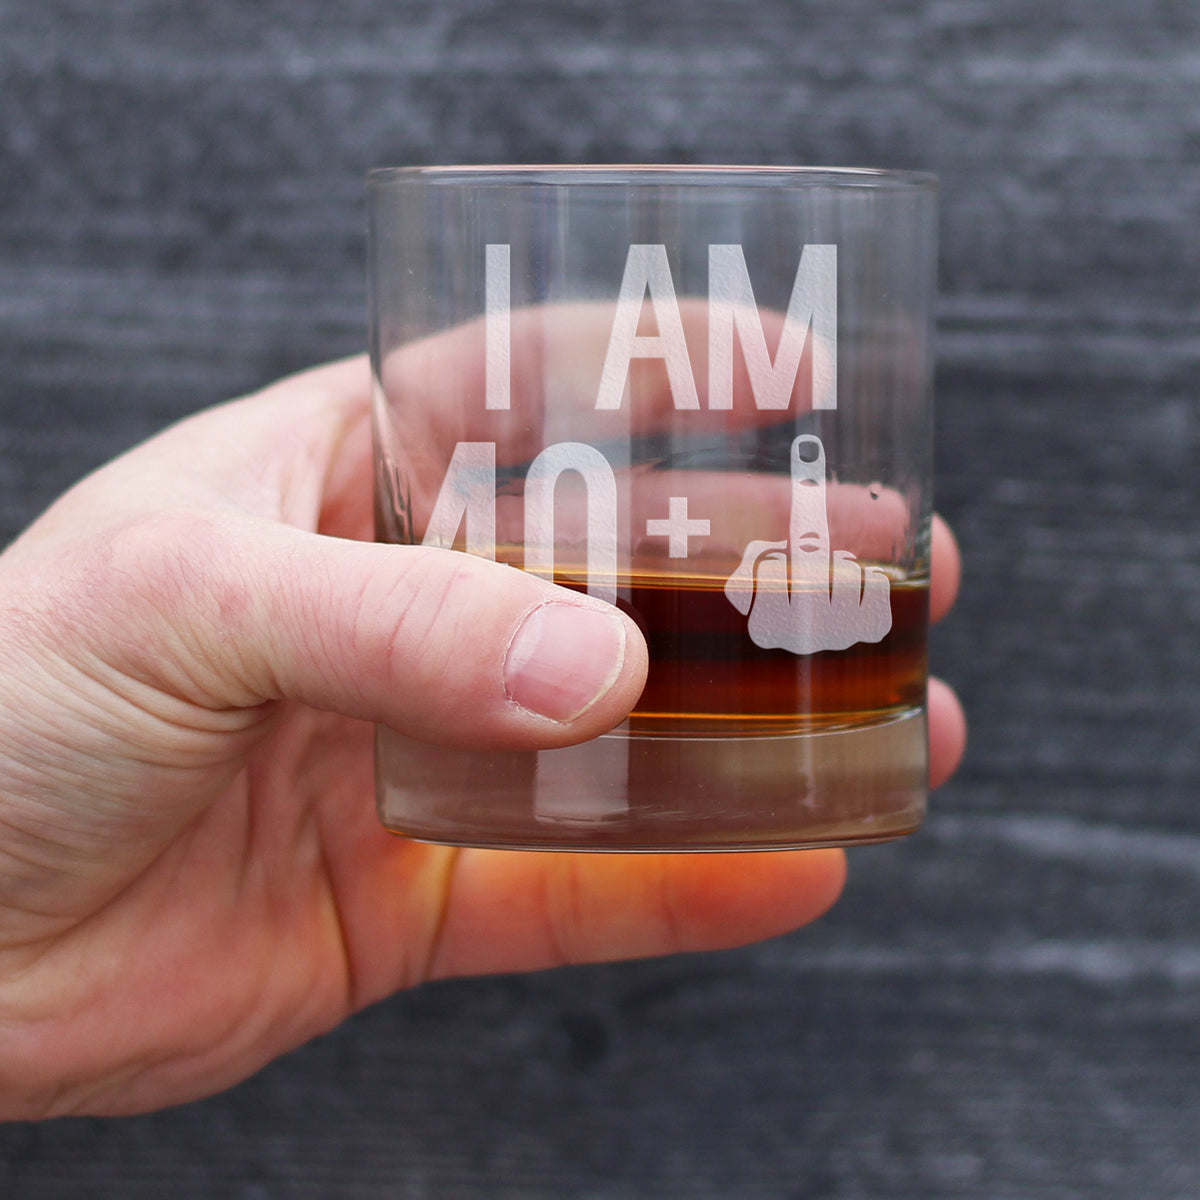 40 + 1 Middle Finger - Funny 41st Birthday Whiskey Rocks Glass Gifts for Men &amp; Women Turning 41 - Fun Whisky Drinking Tumbler